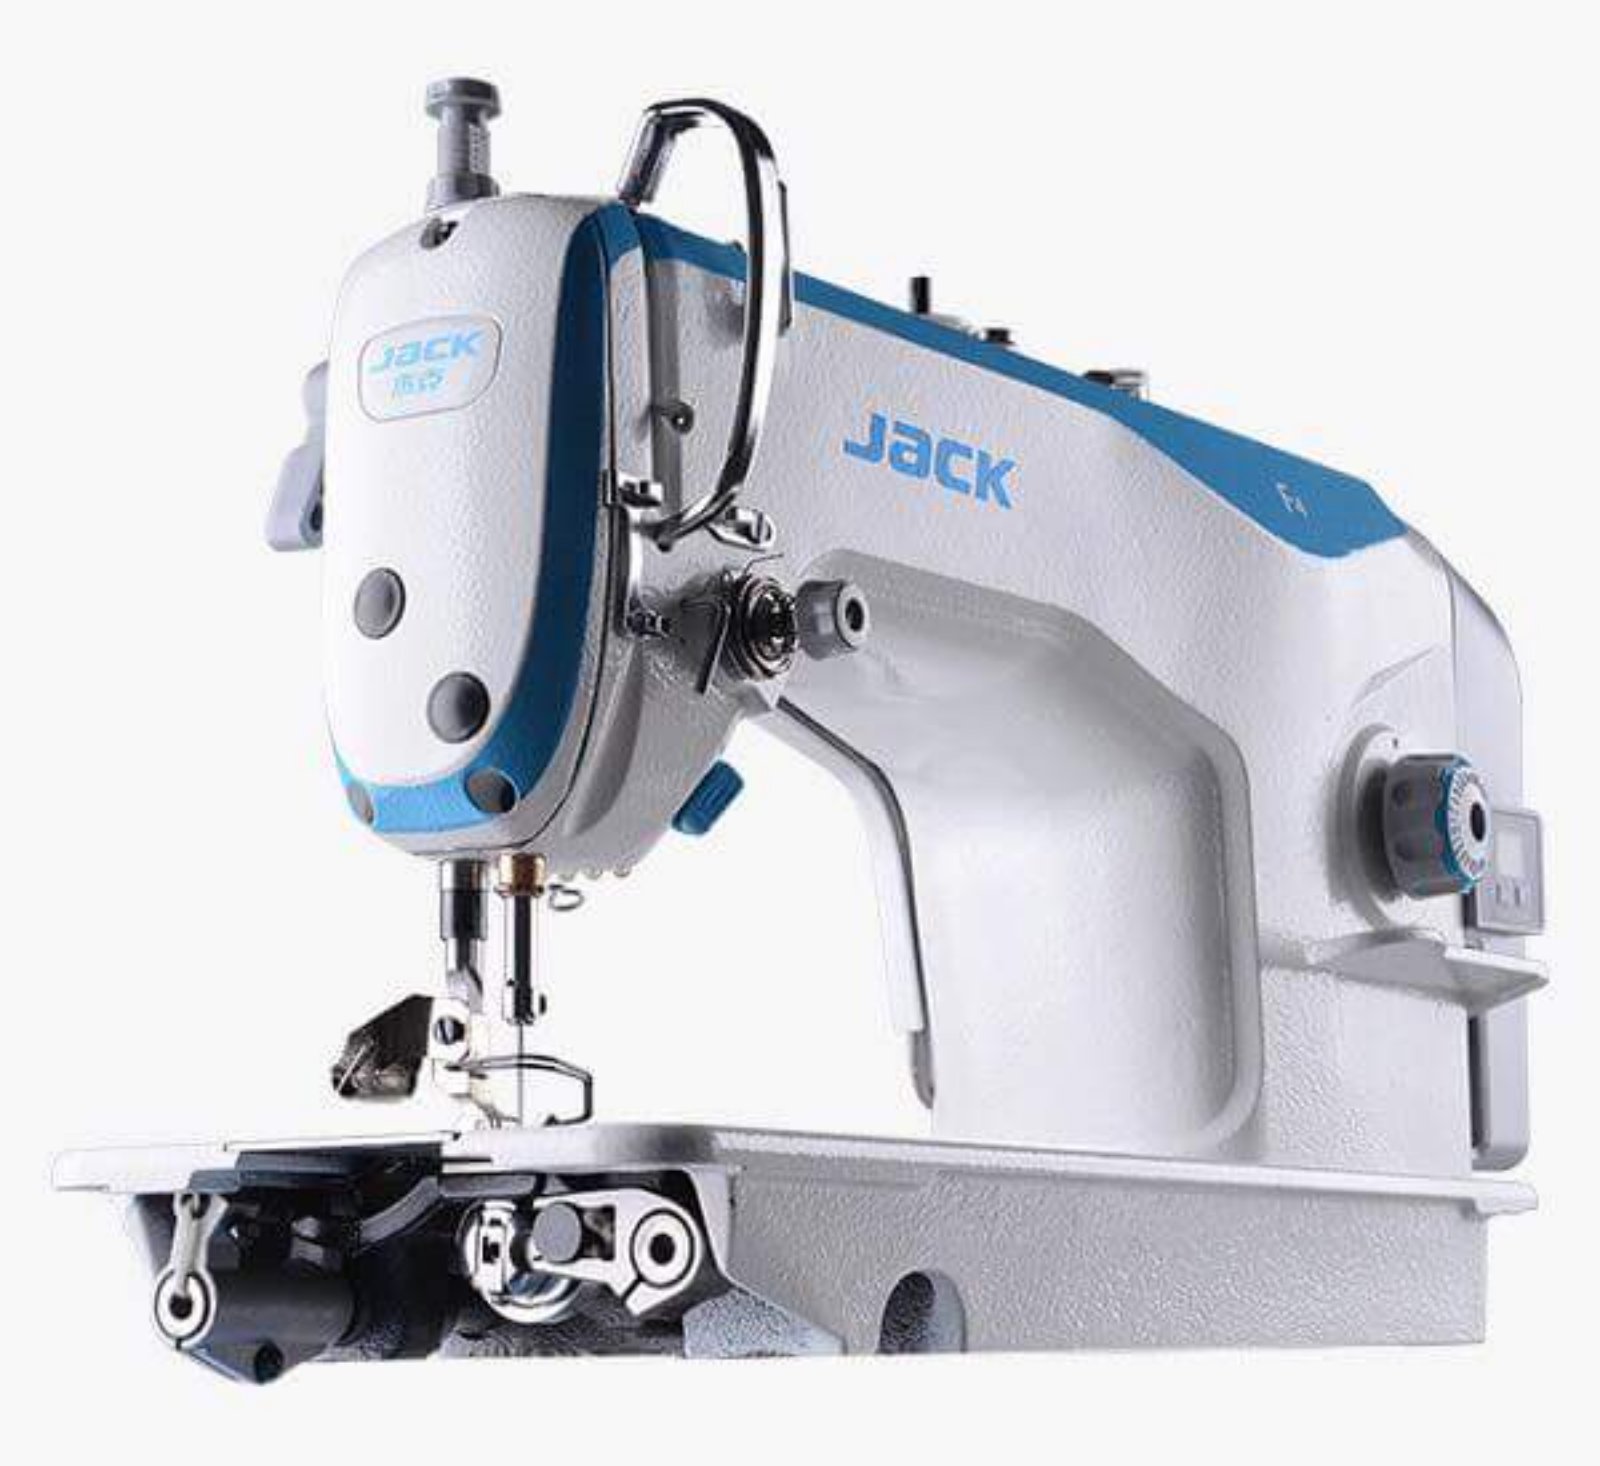 Jack Hi Speed Sewing Machine